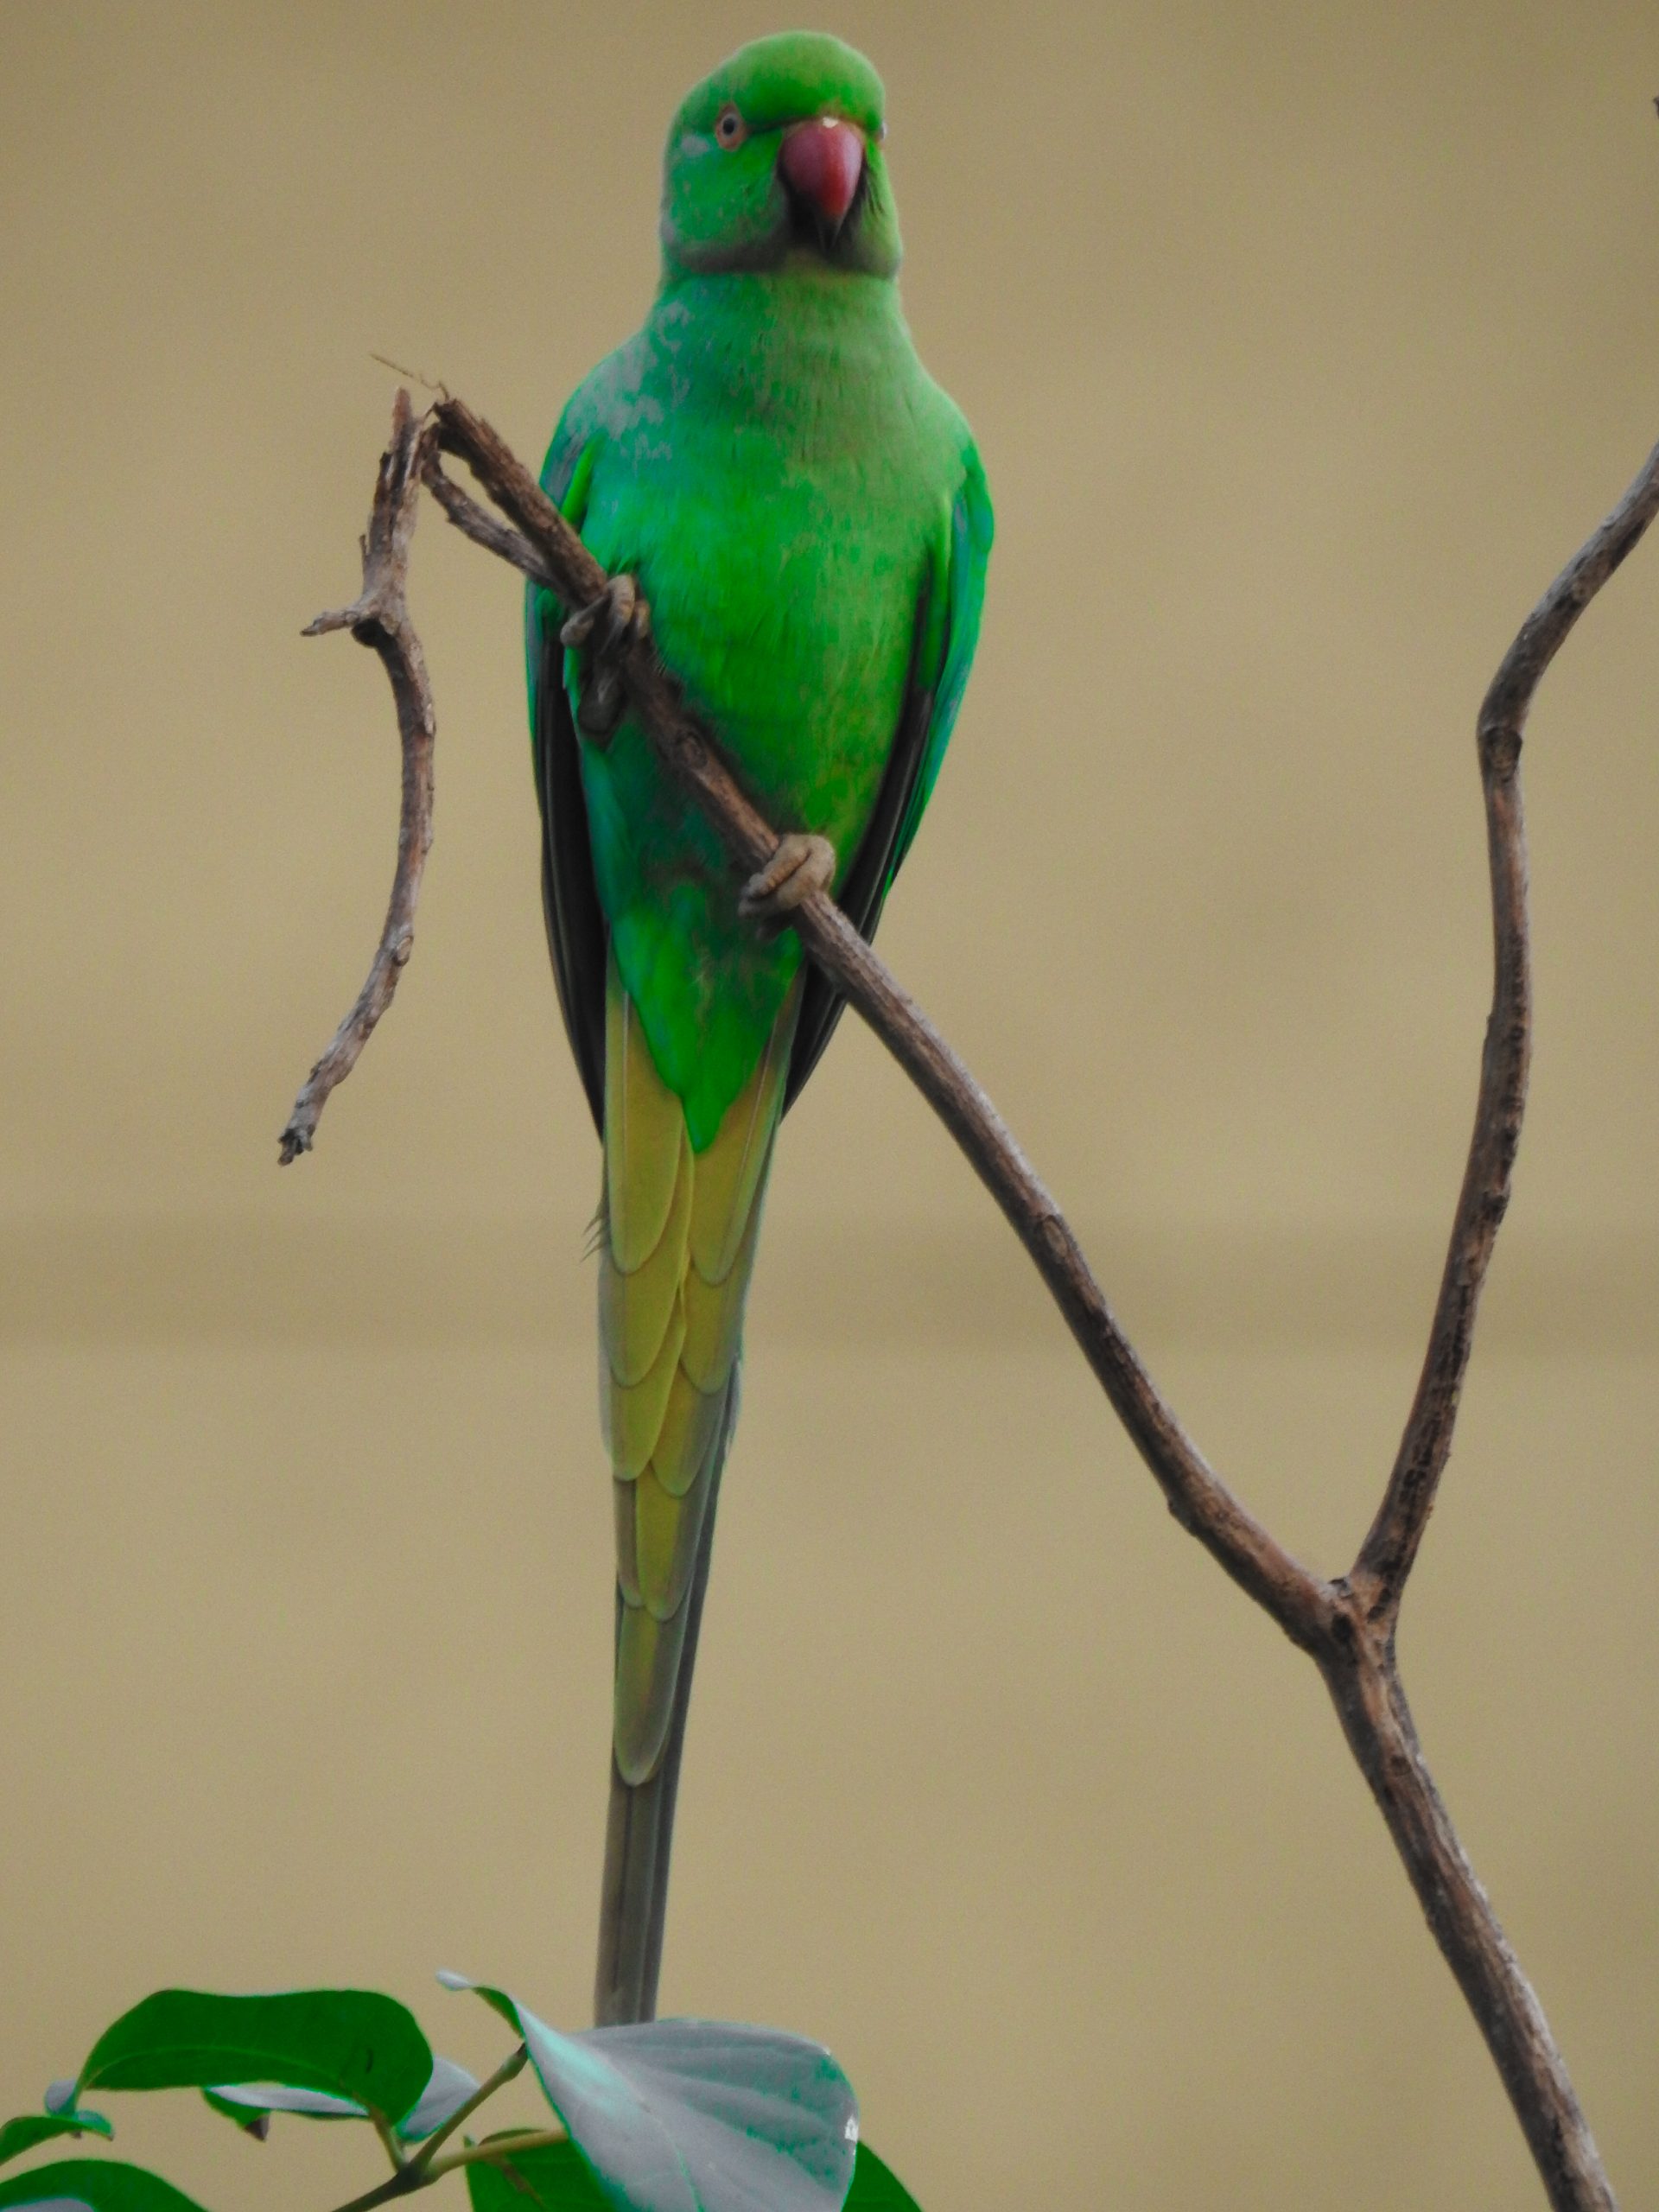 Ringed Parakeet in Tree Branch on Focus